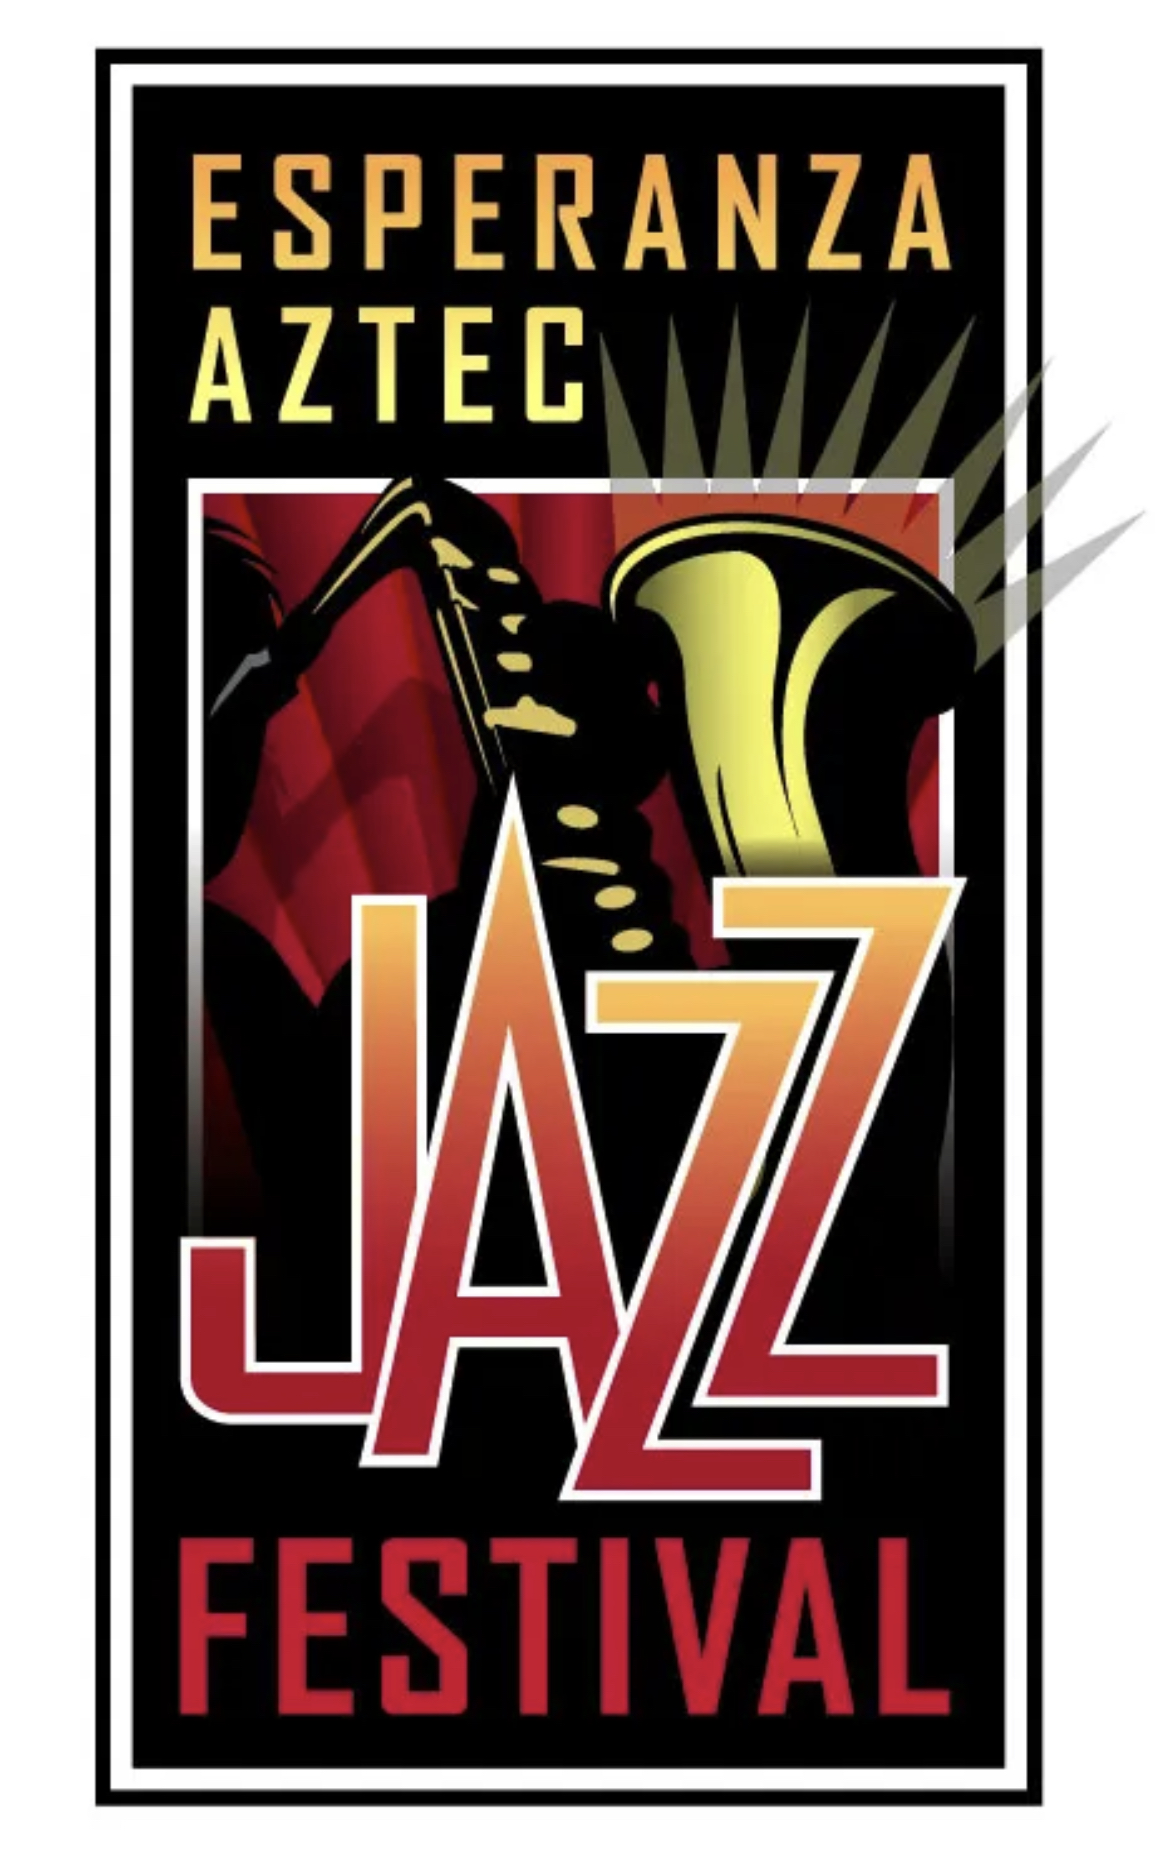 Aztec Jazz Festival